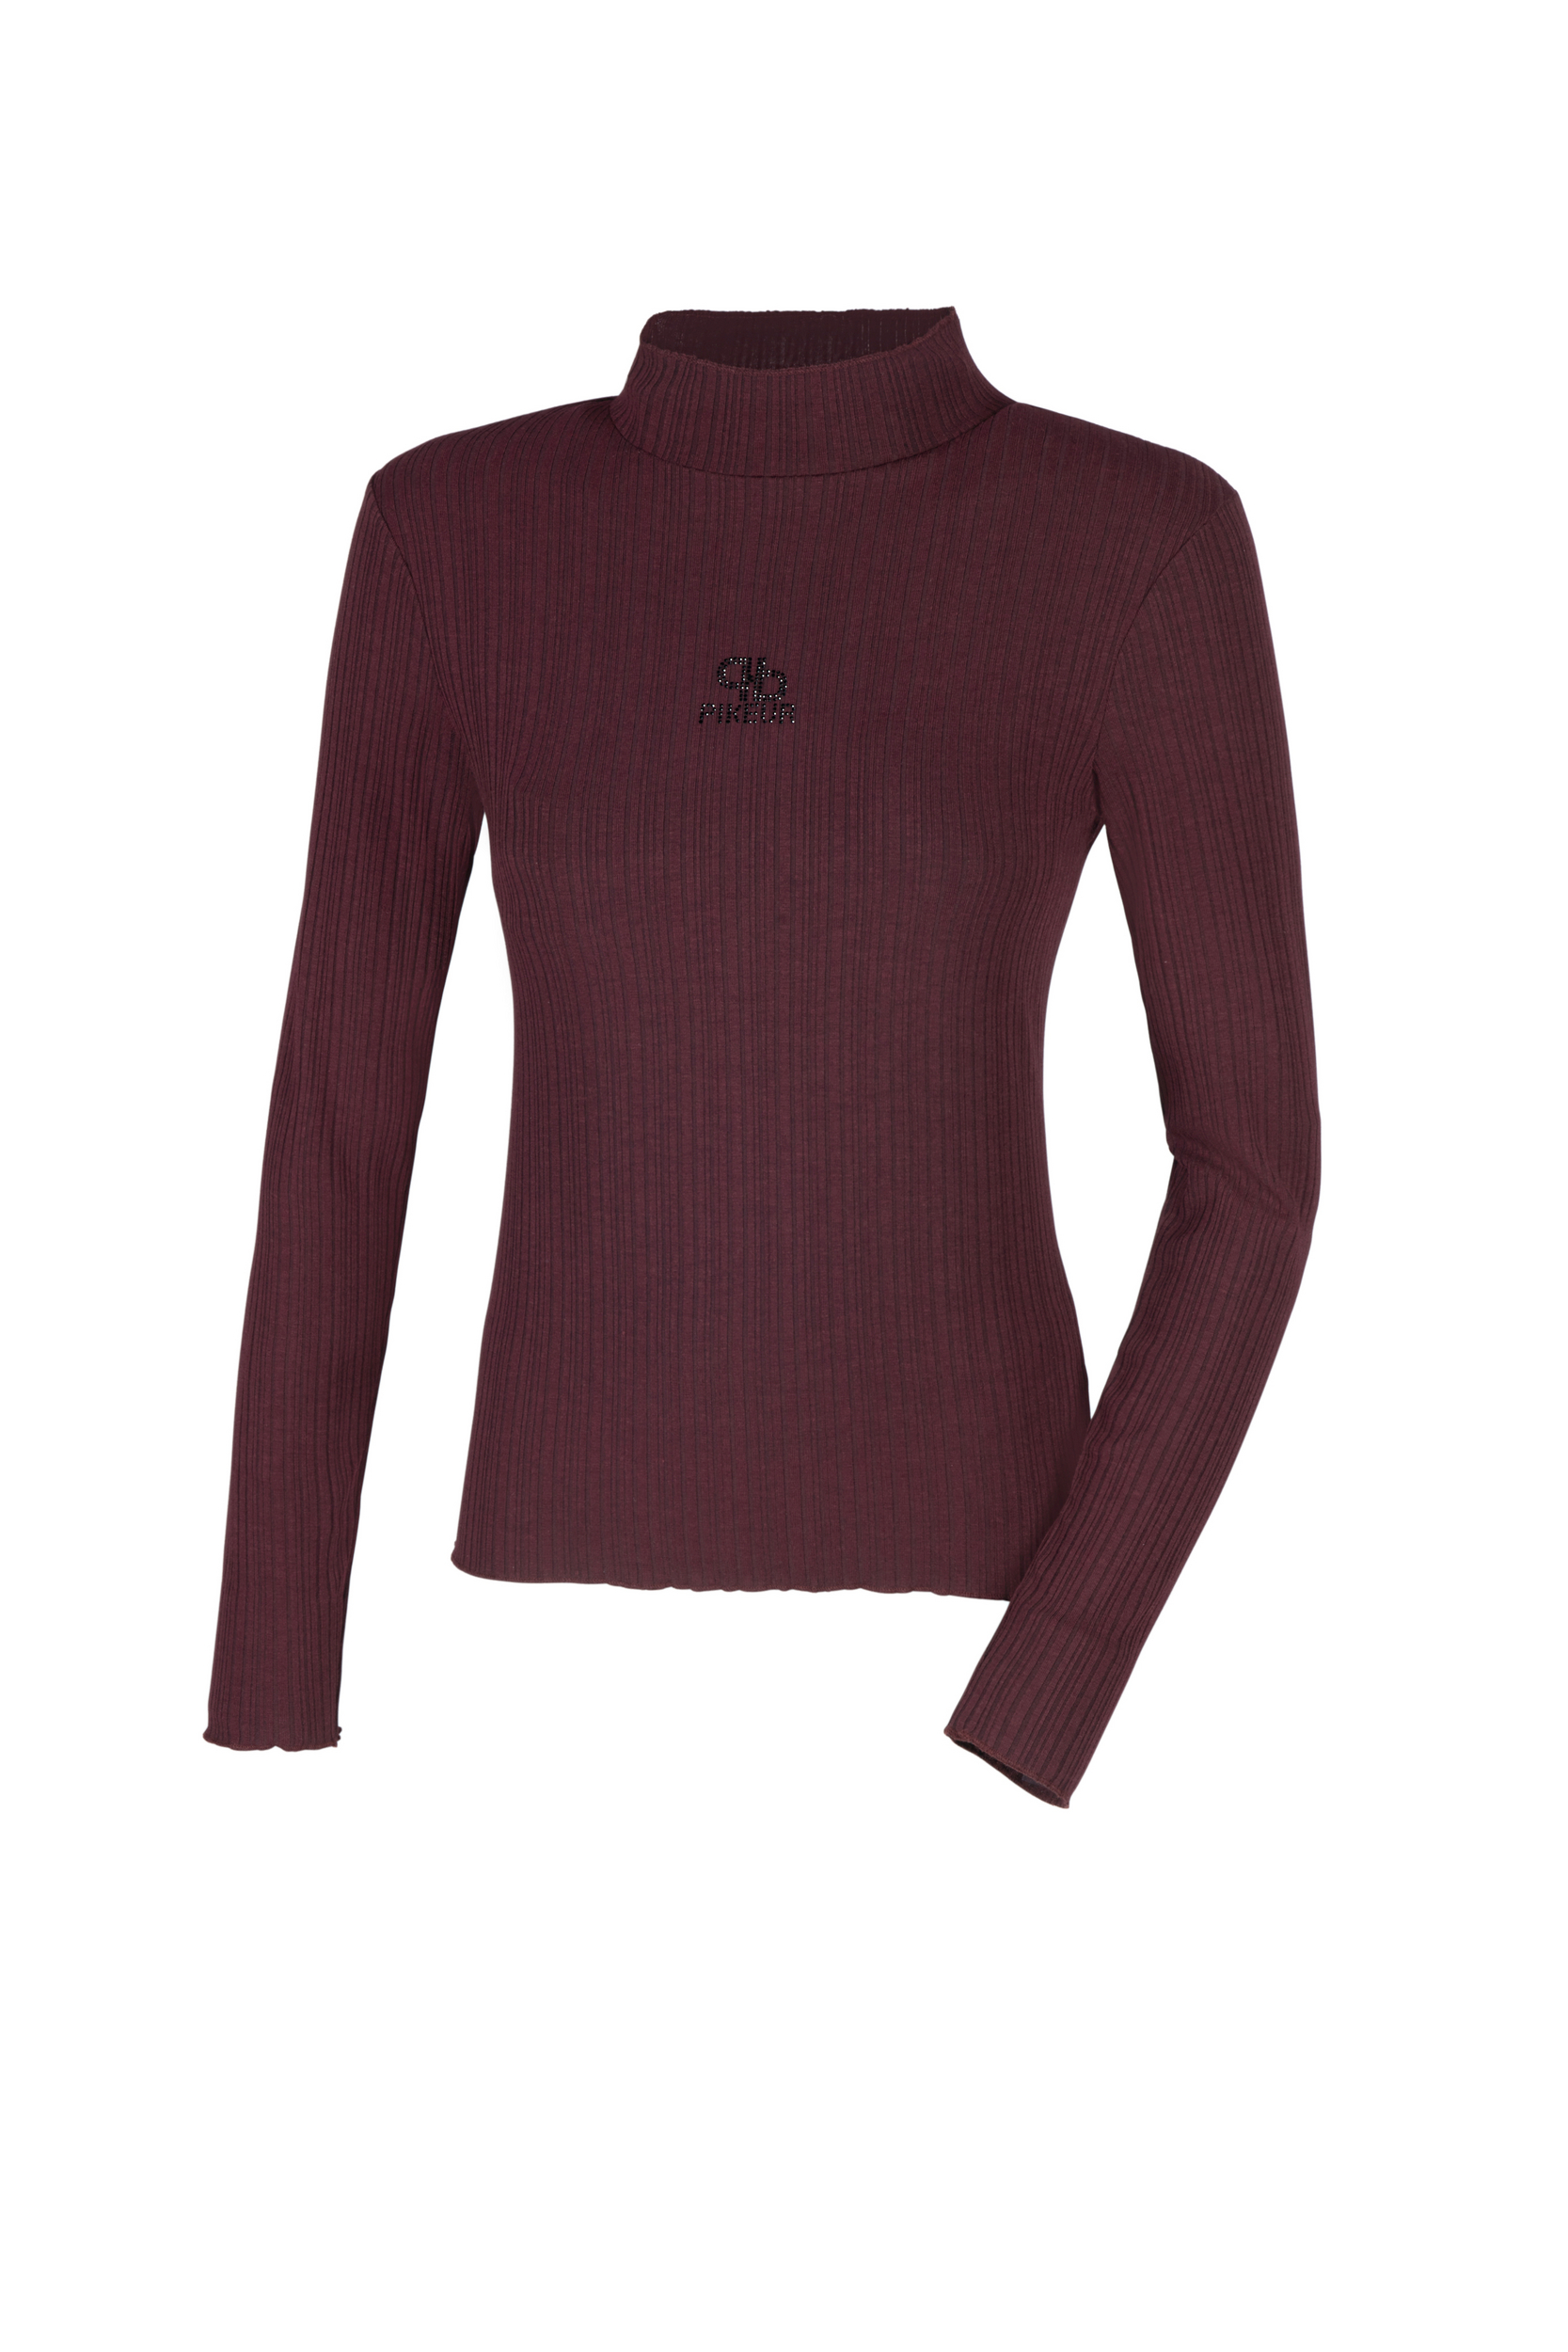 PIKEUR elegantes Damen Rip Shirt 4277 Selection 23 - mulberry - 38 - 2